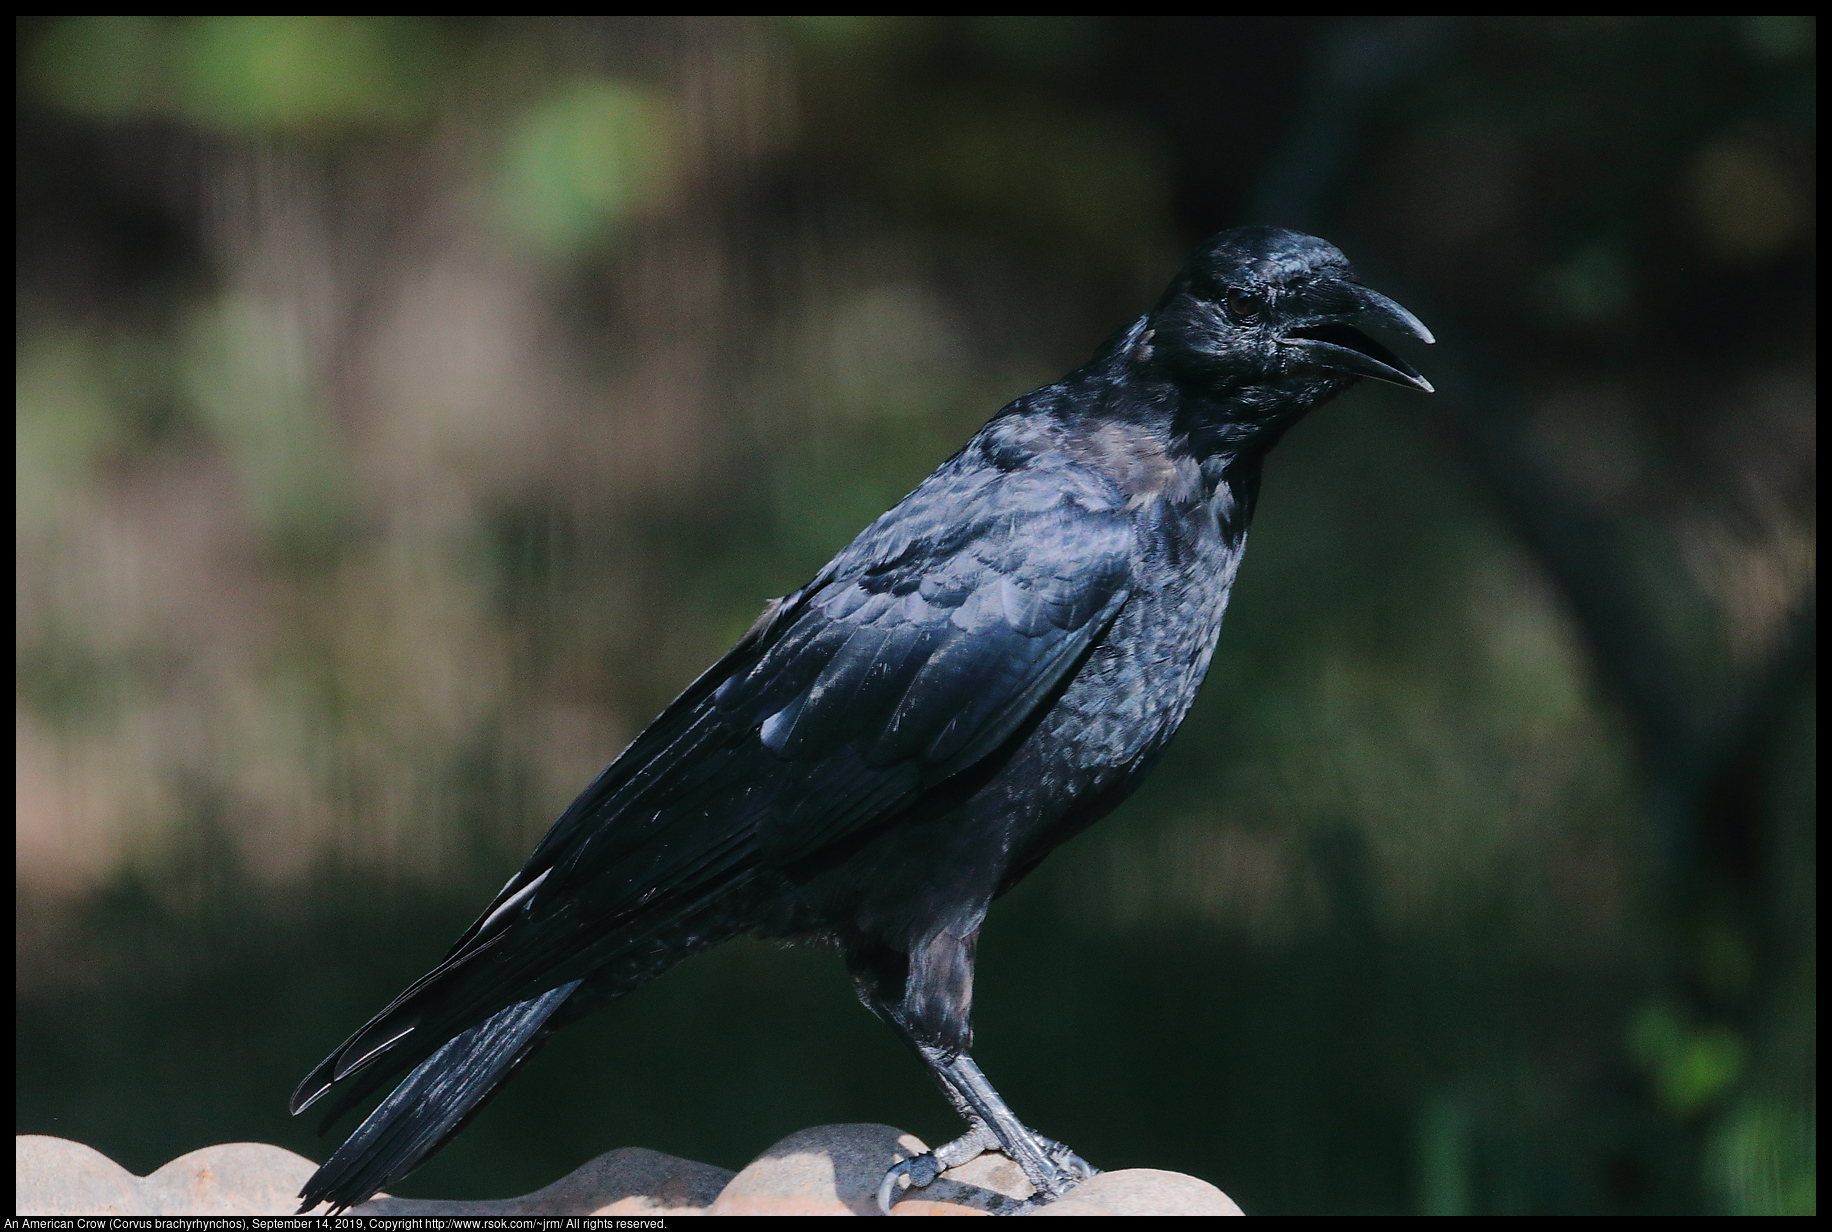 An American Crow (Corvus brachyrhynchos), September 14, 2019